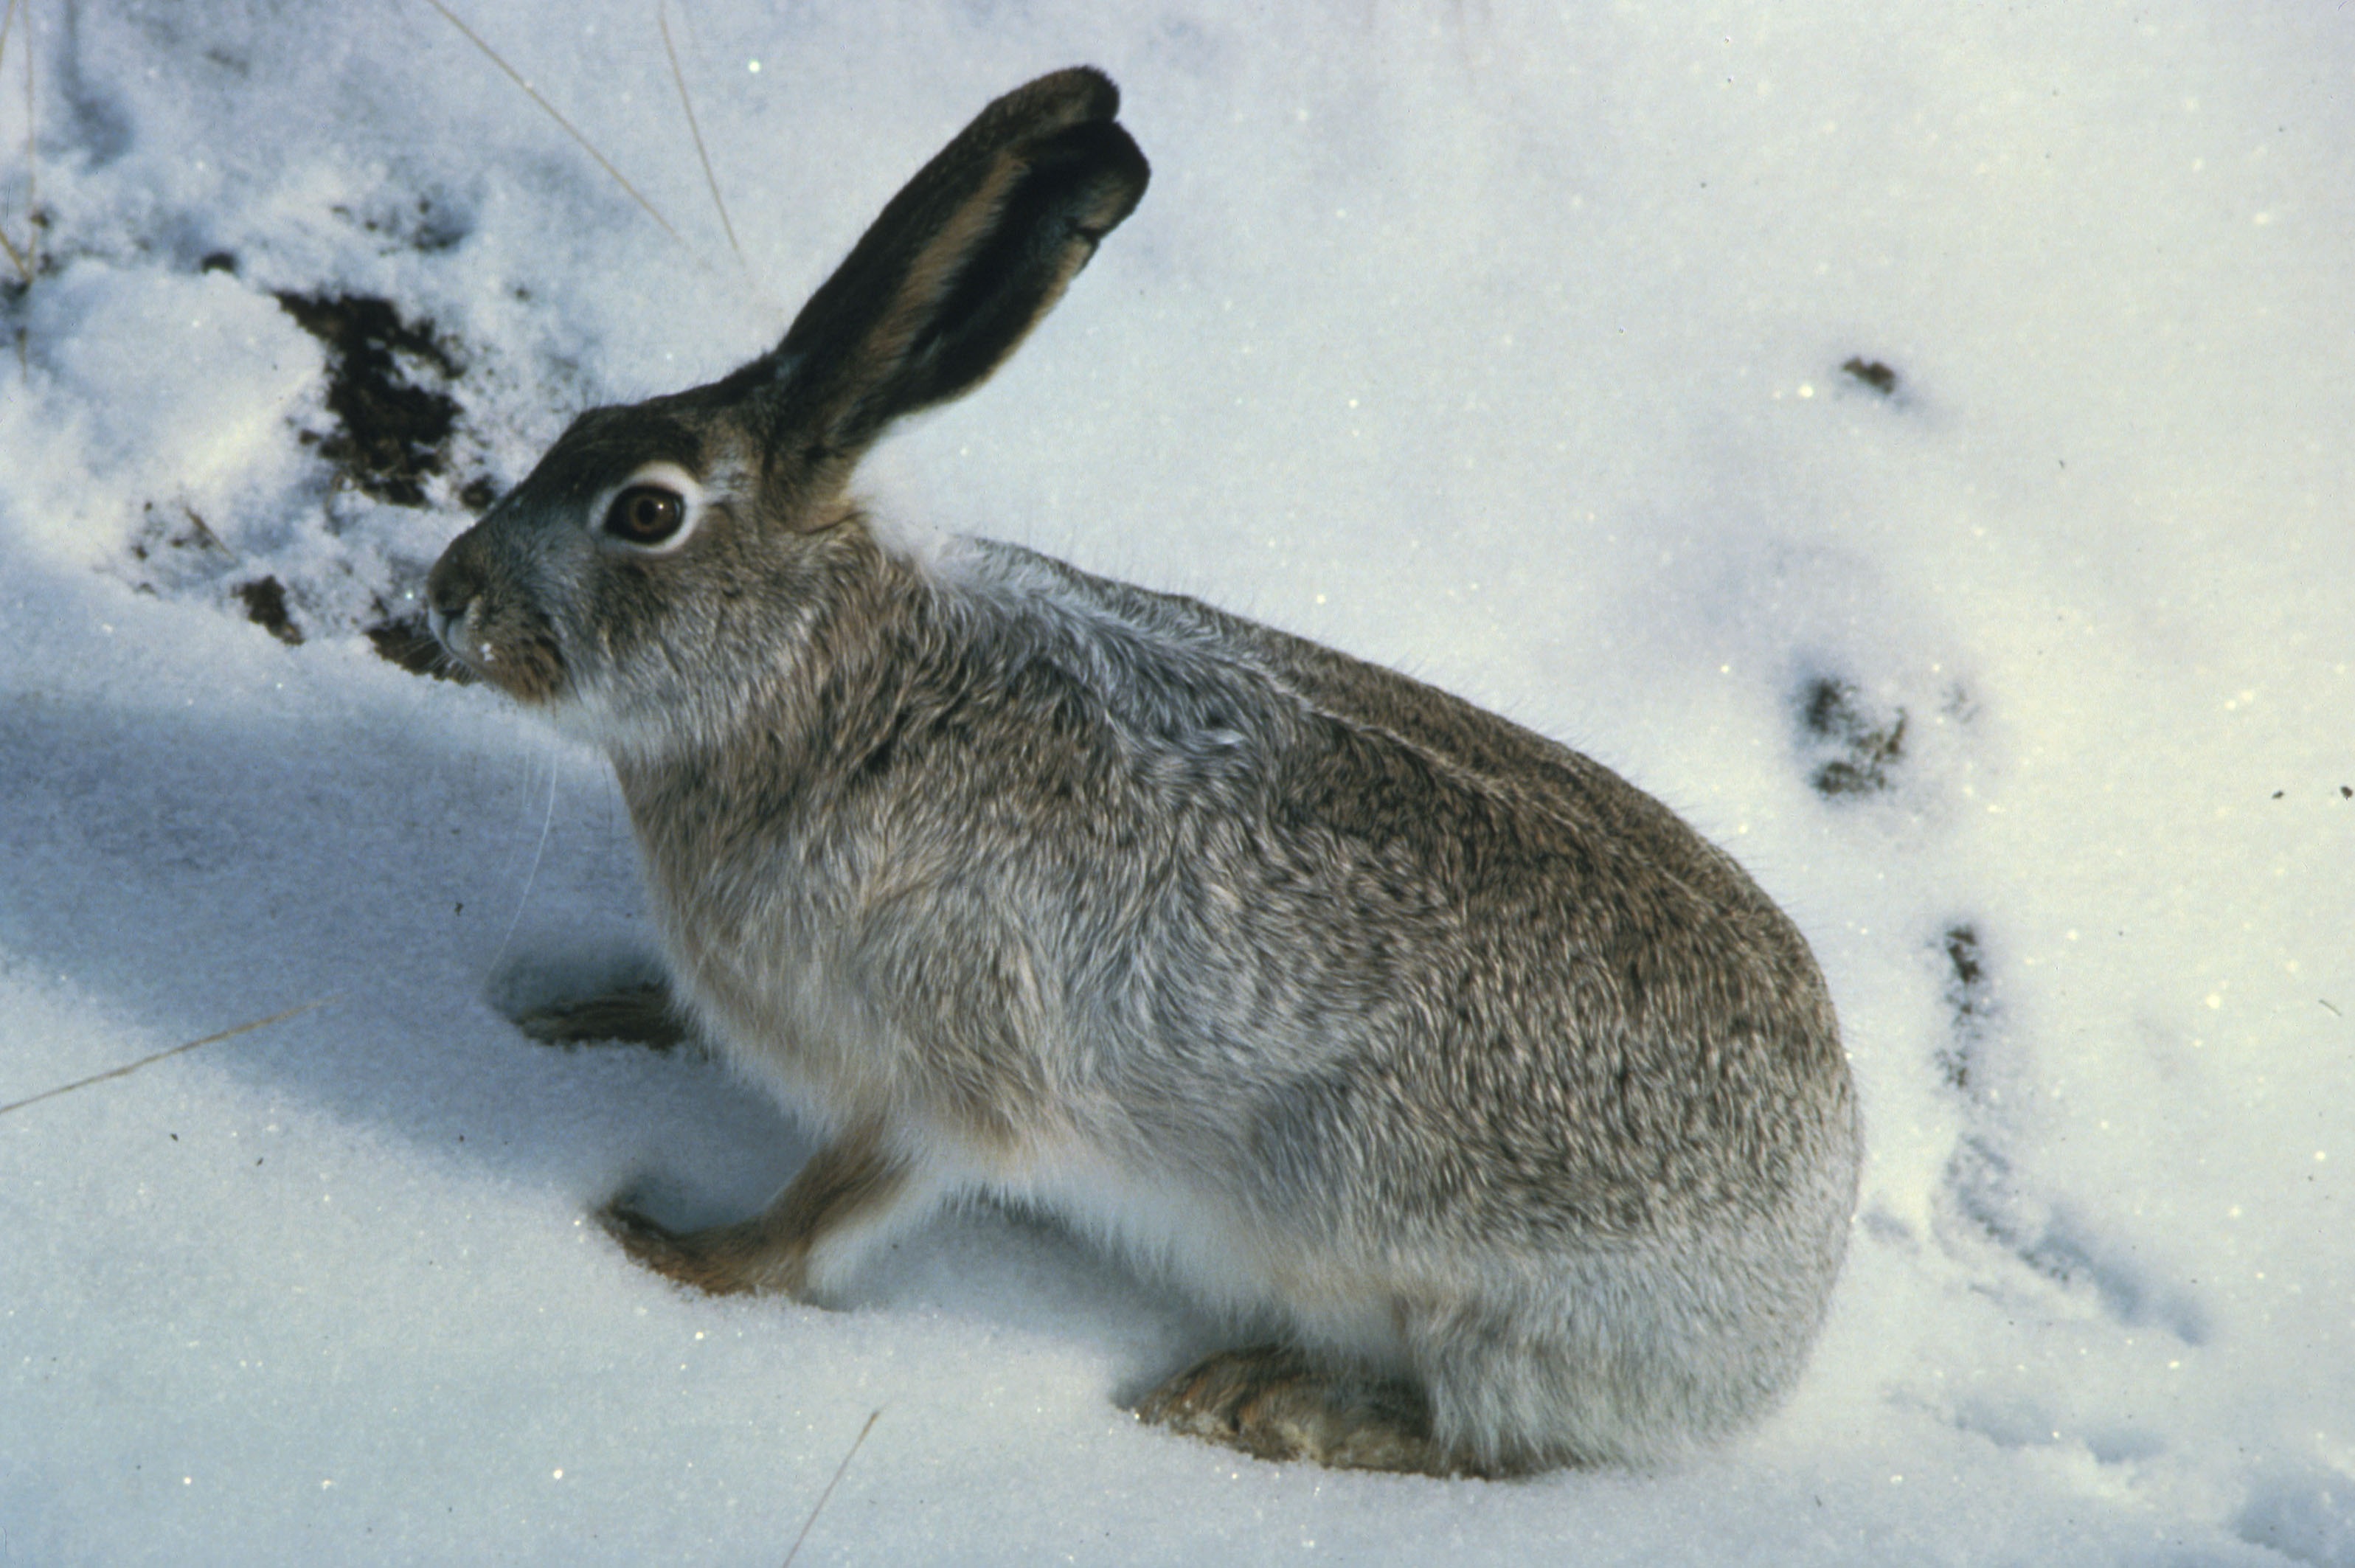 Rabbit in the snow photo